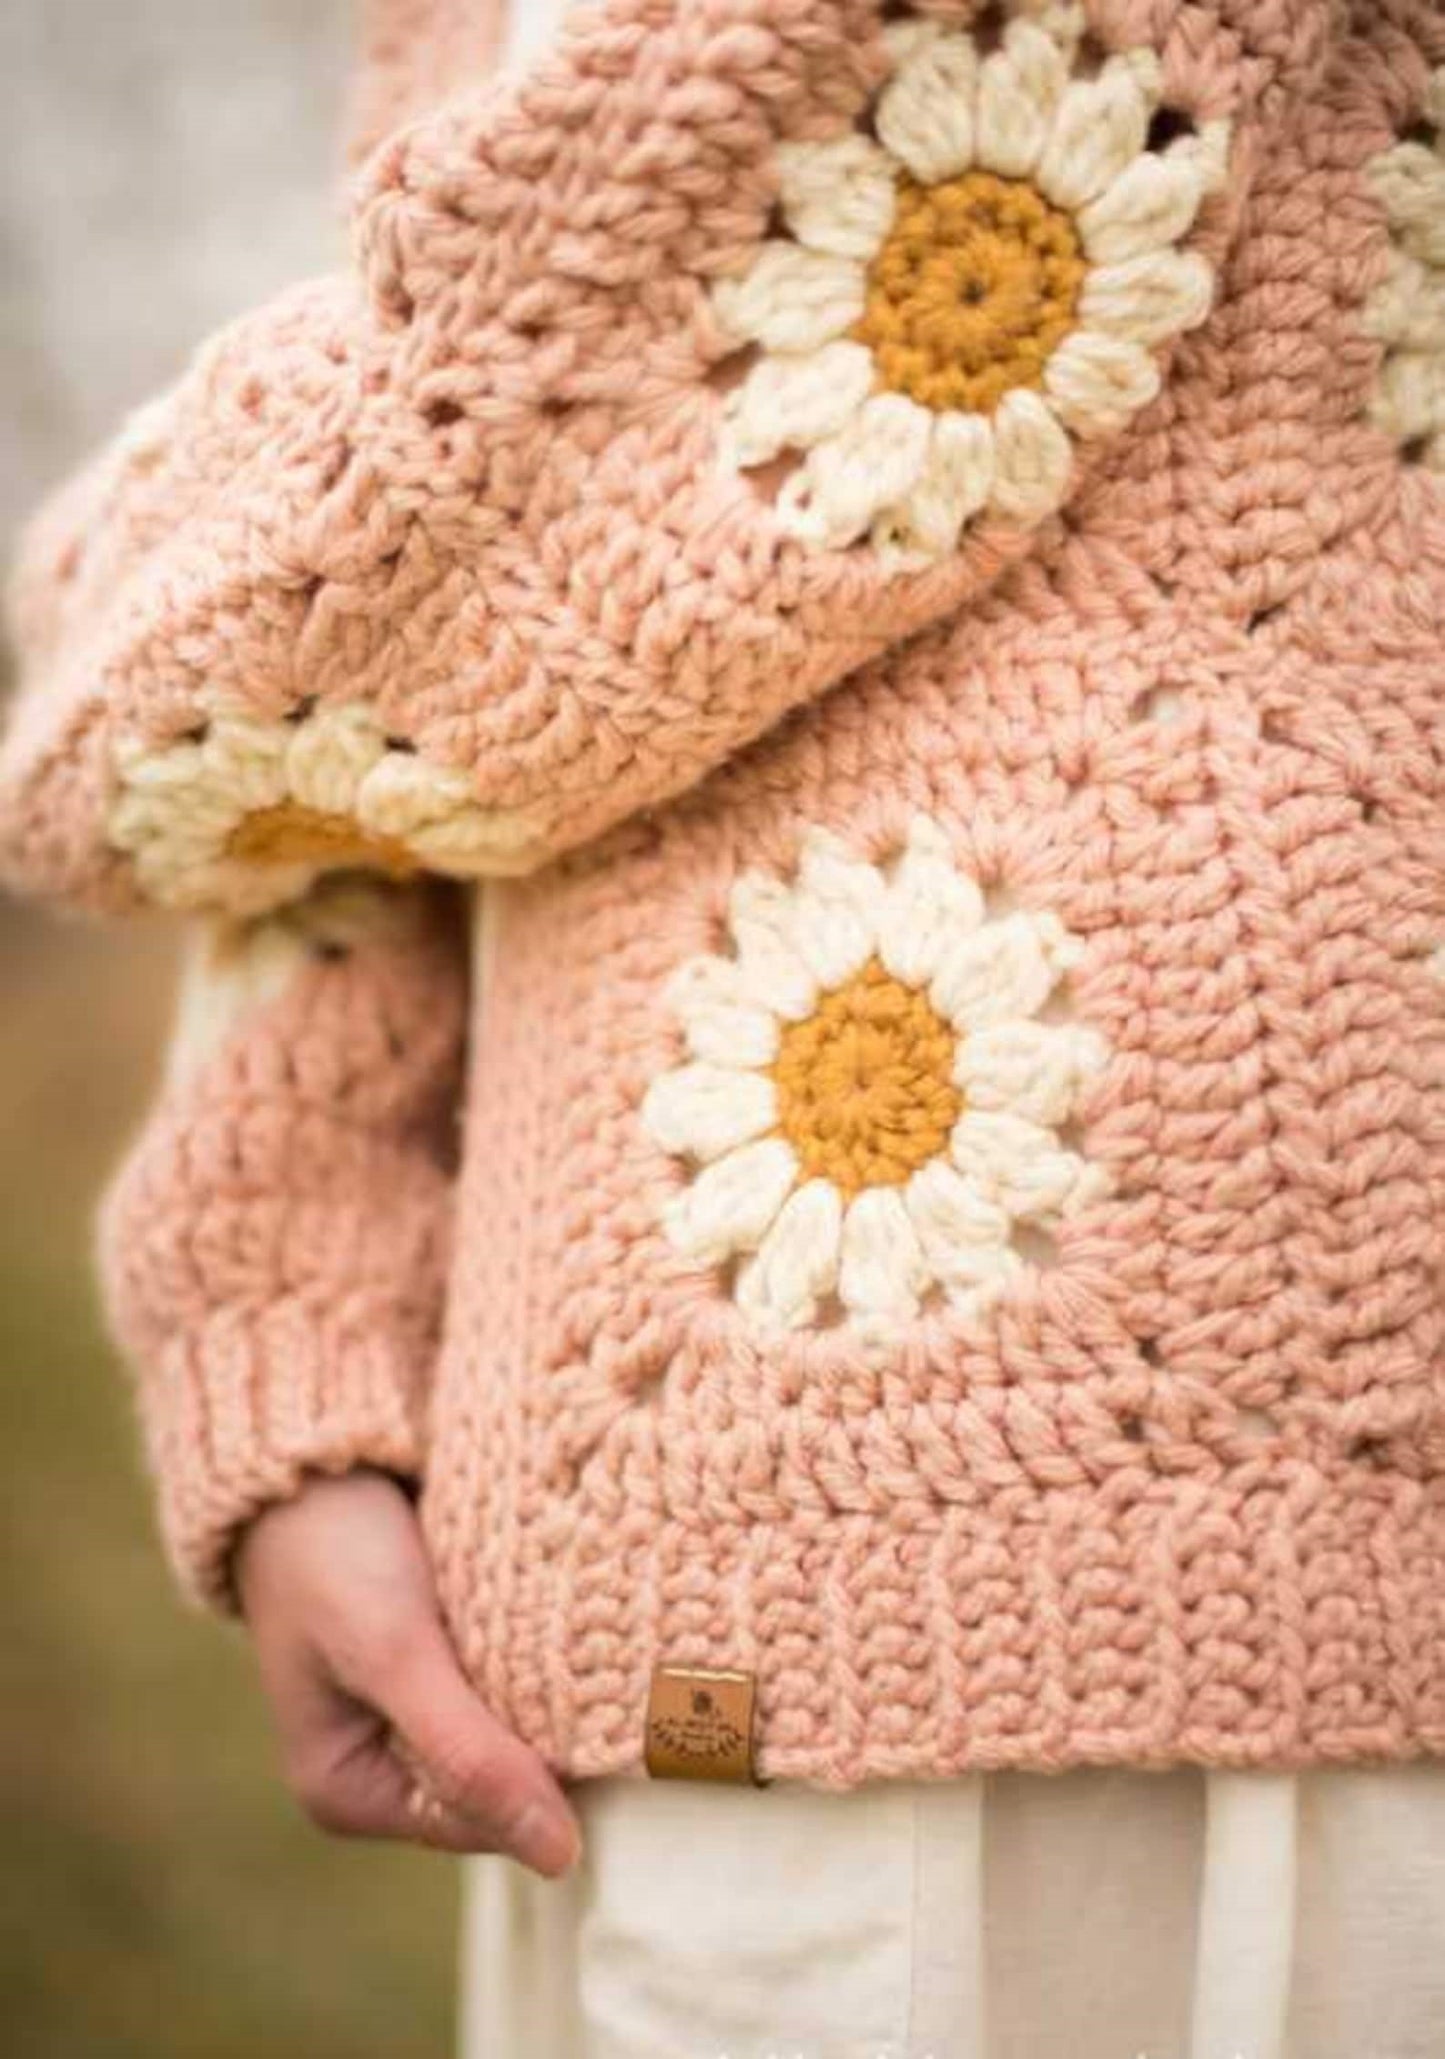 Cozy Daisy Cardigan Crochet Pattern